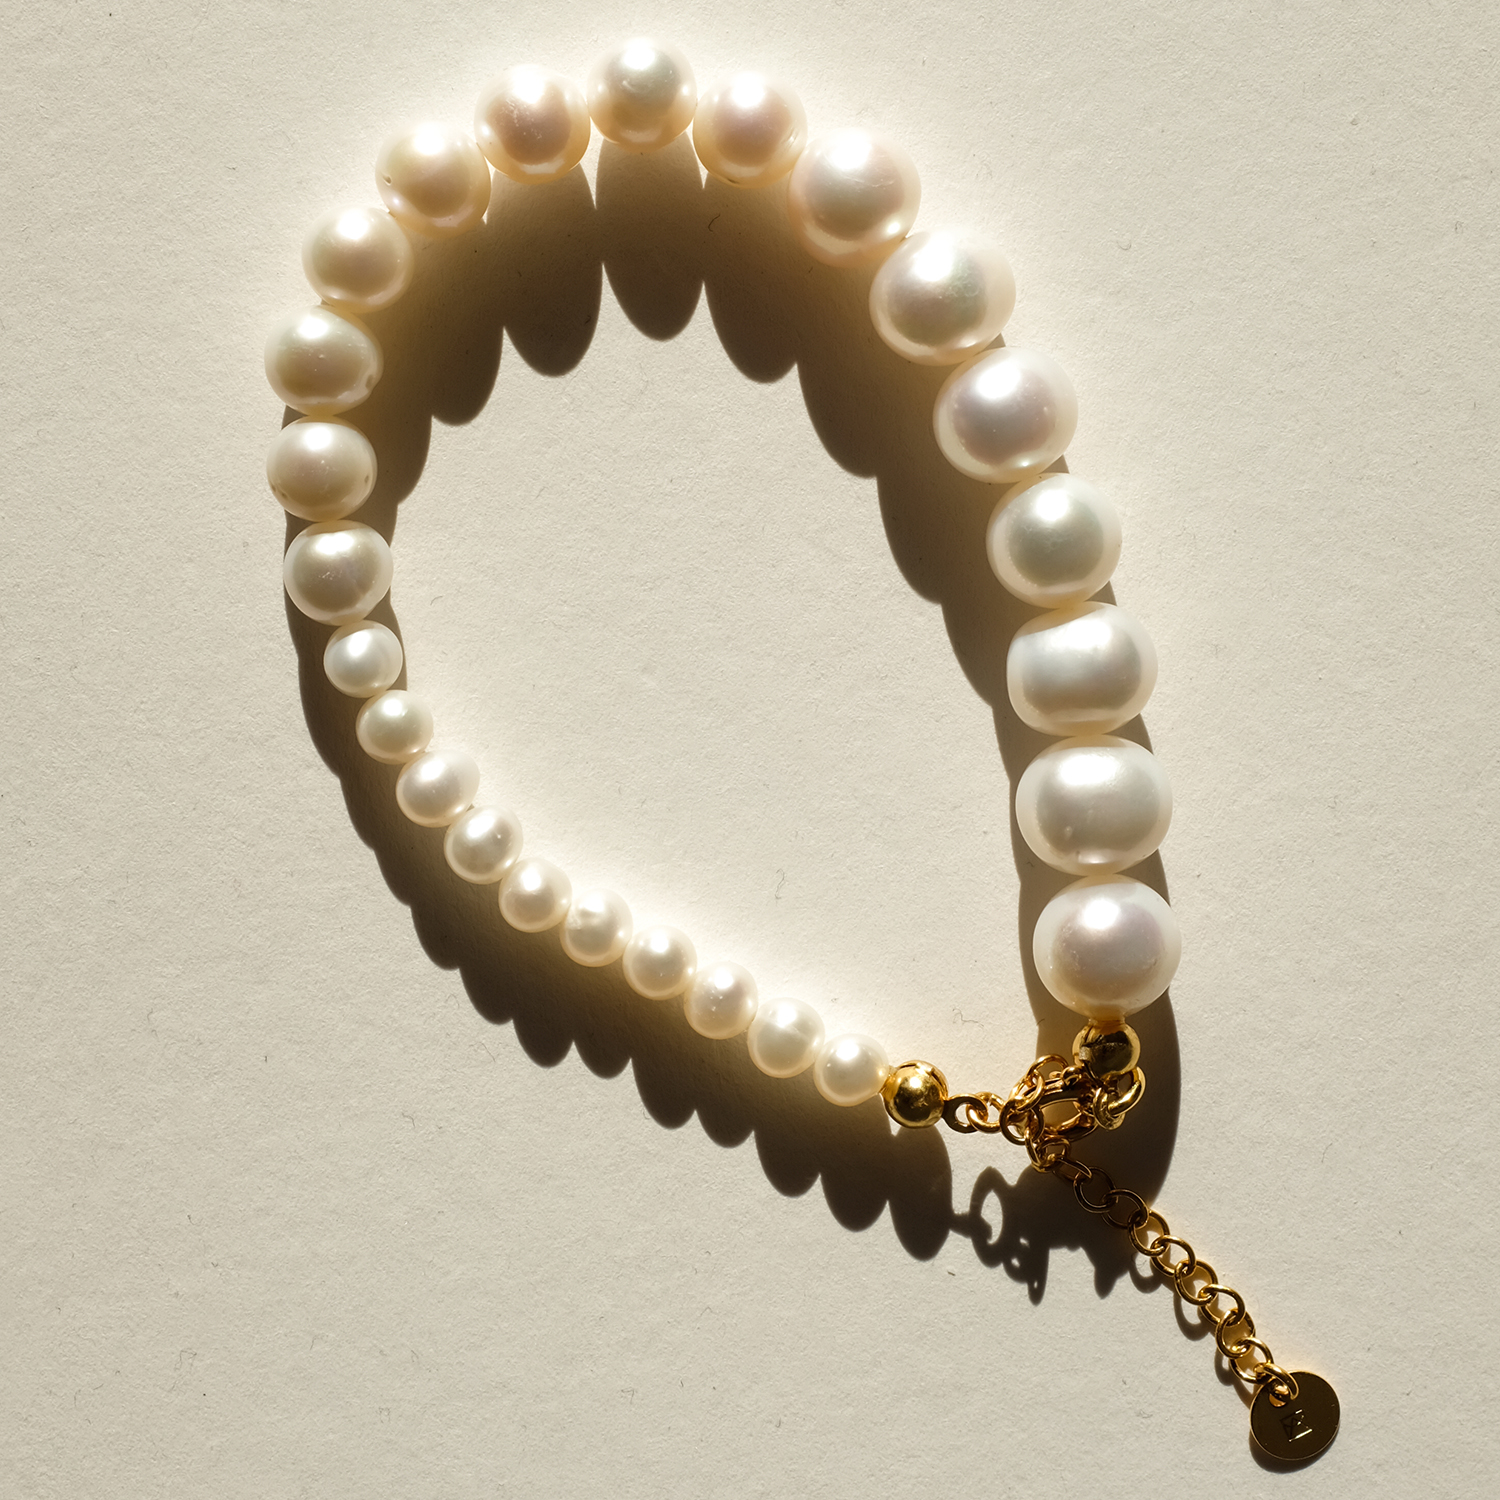 metaformi_design_jewelry_pearl_bracelet_lifestyle_3